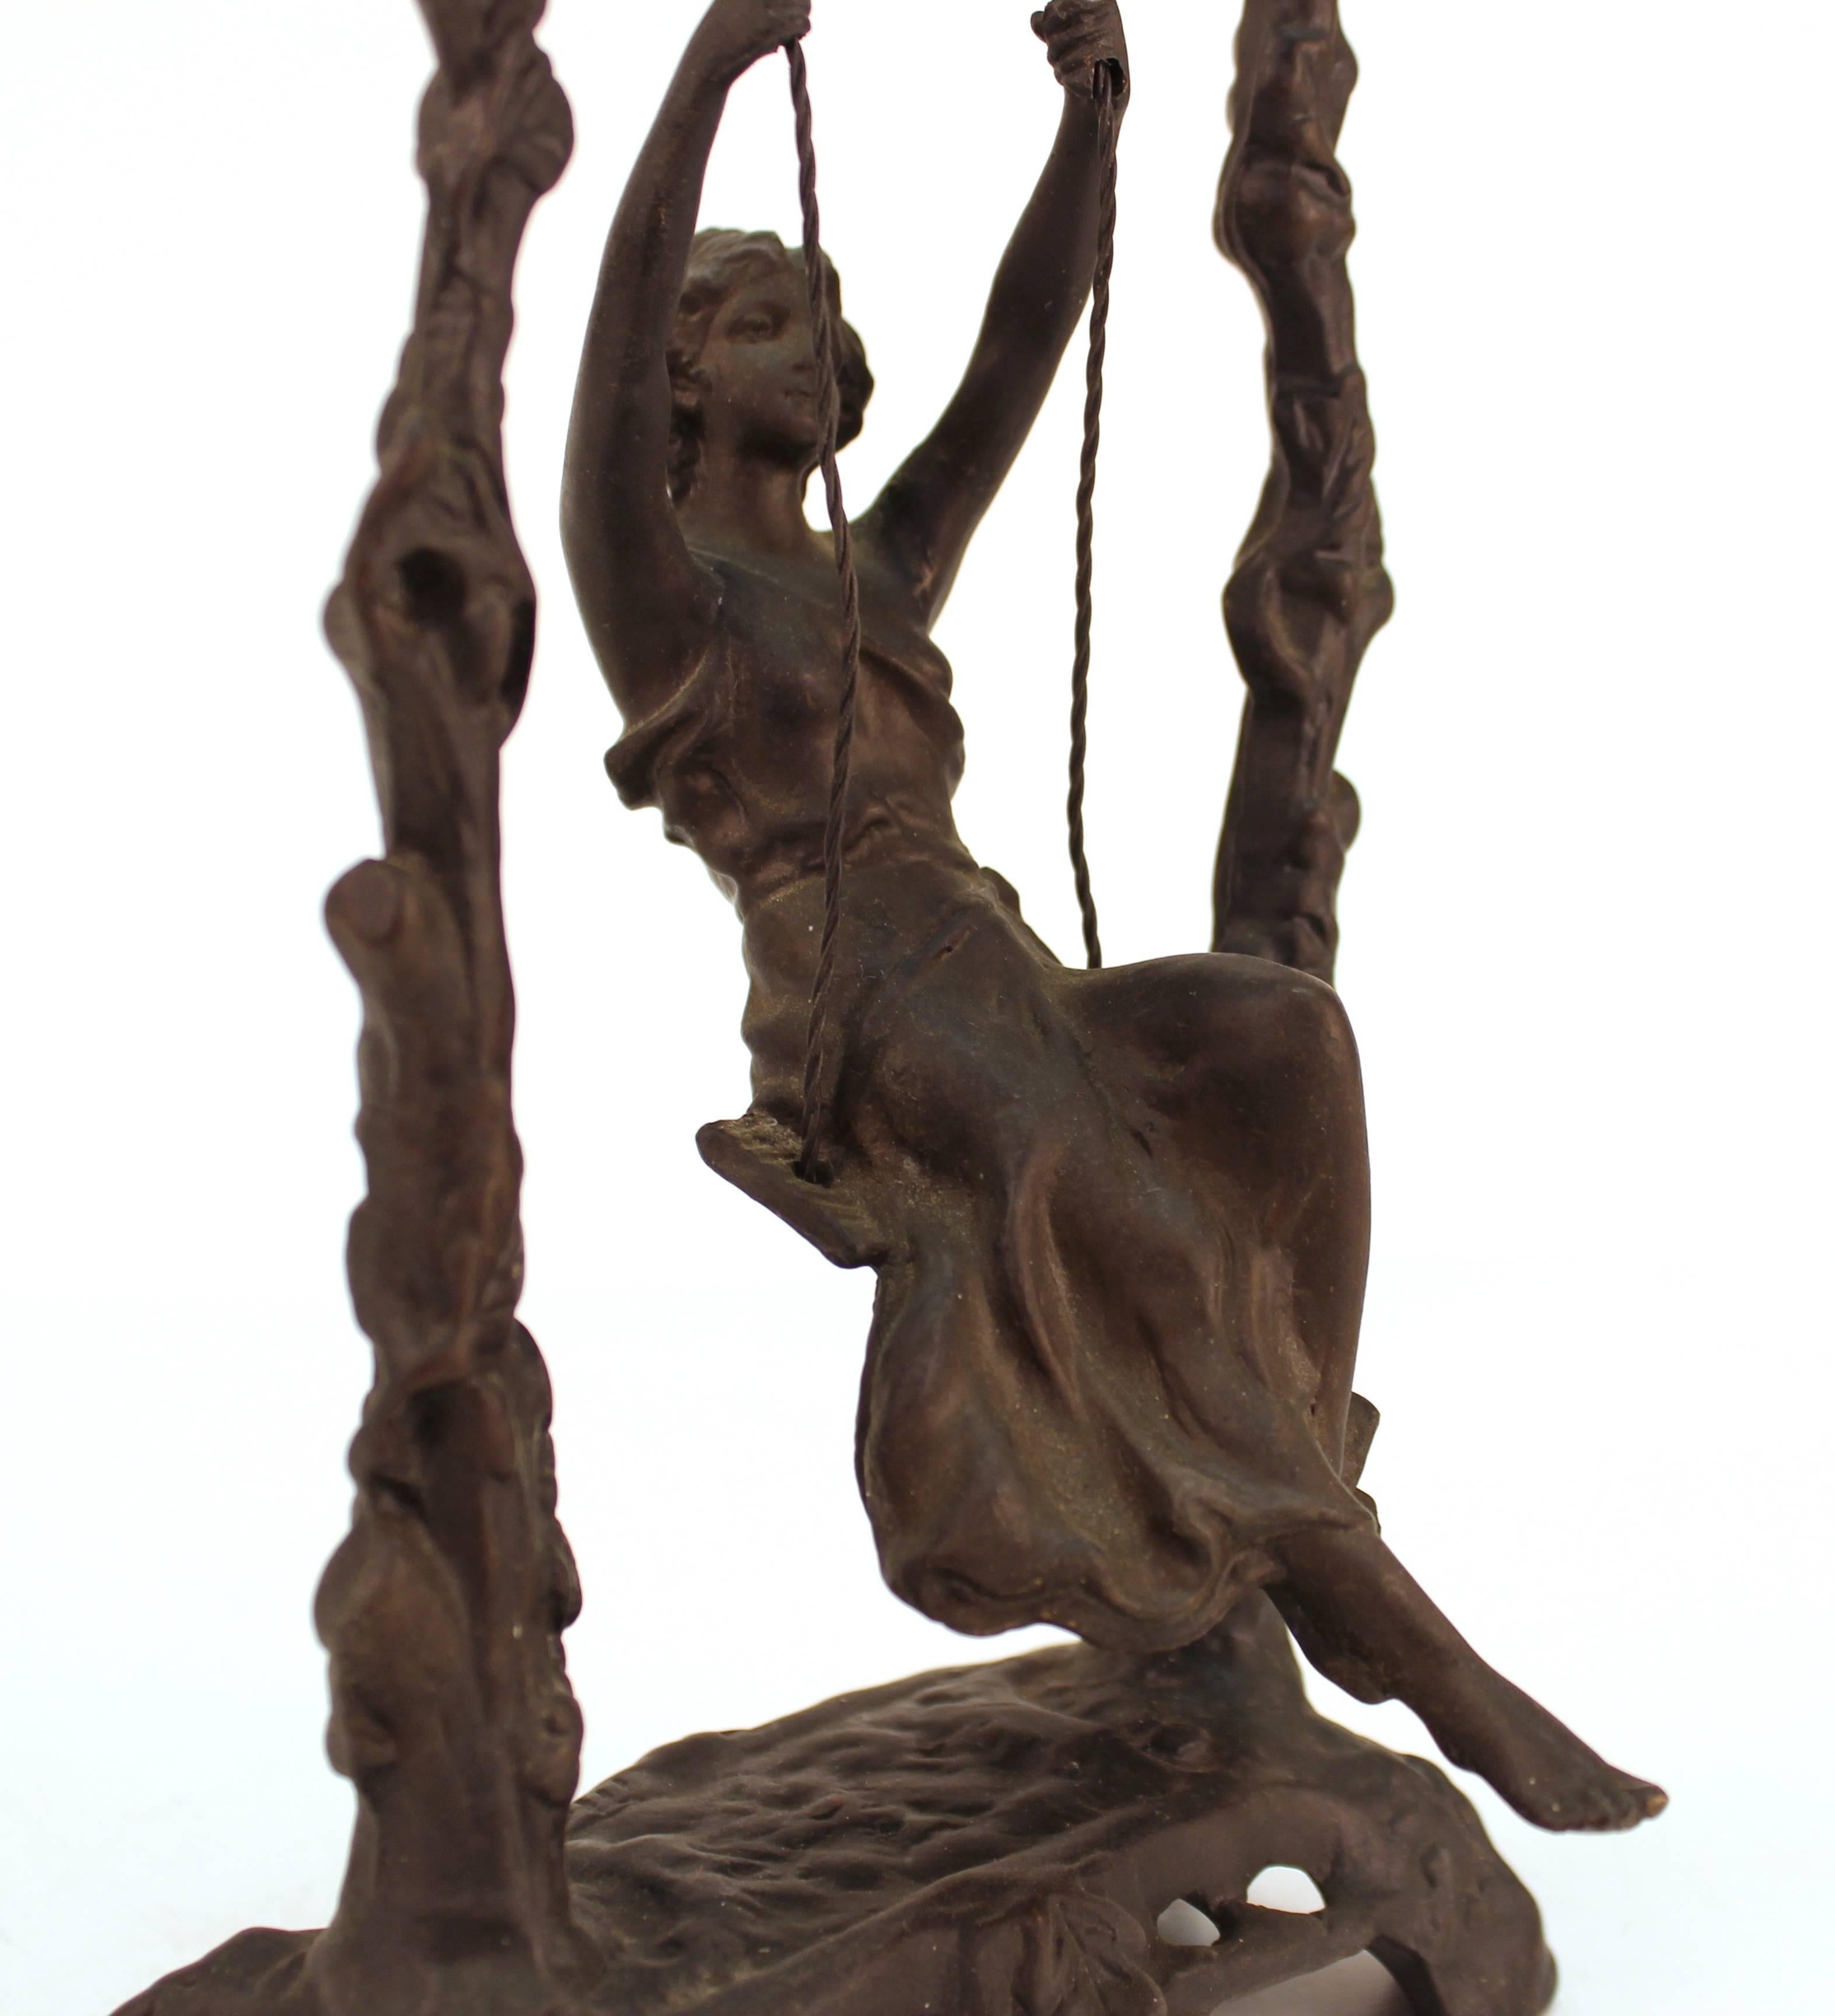 European Art Nouveau Bronze Sculpture after Auguste Moreau titled 'Girl on Swing'